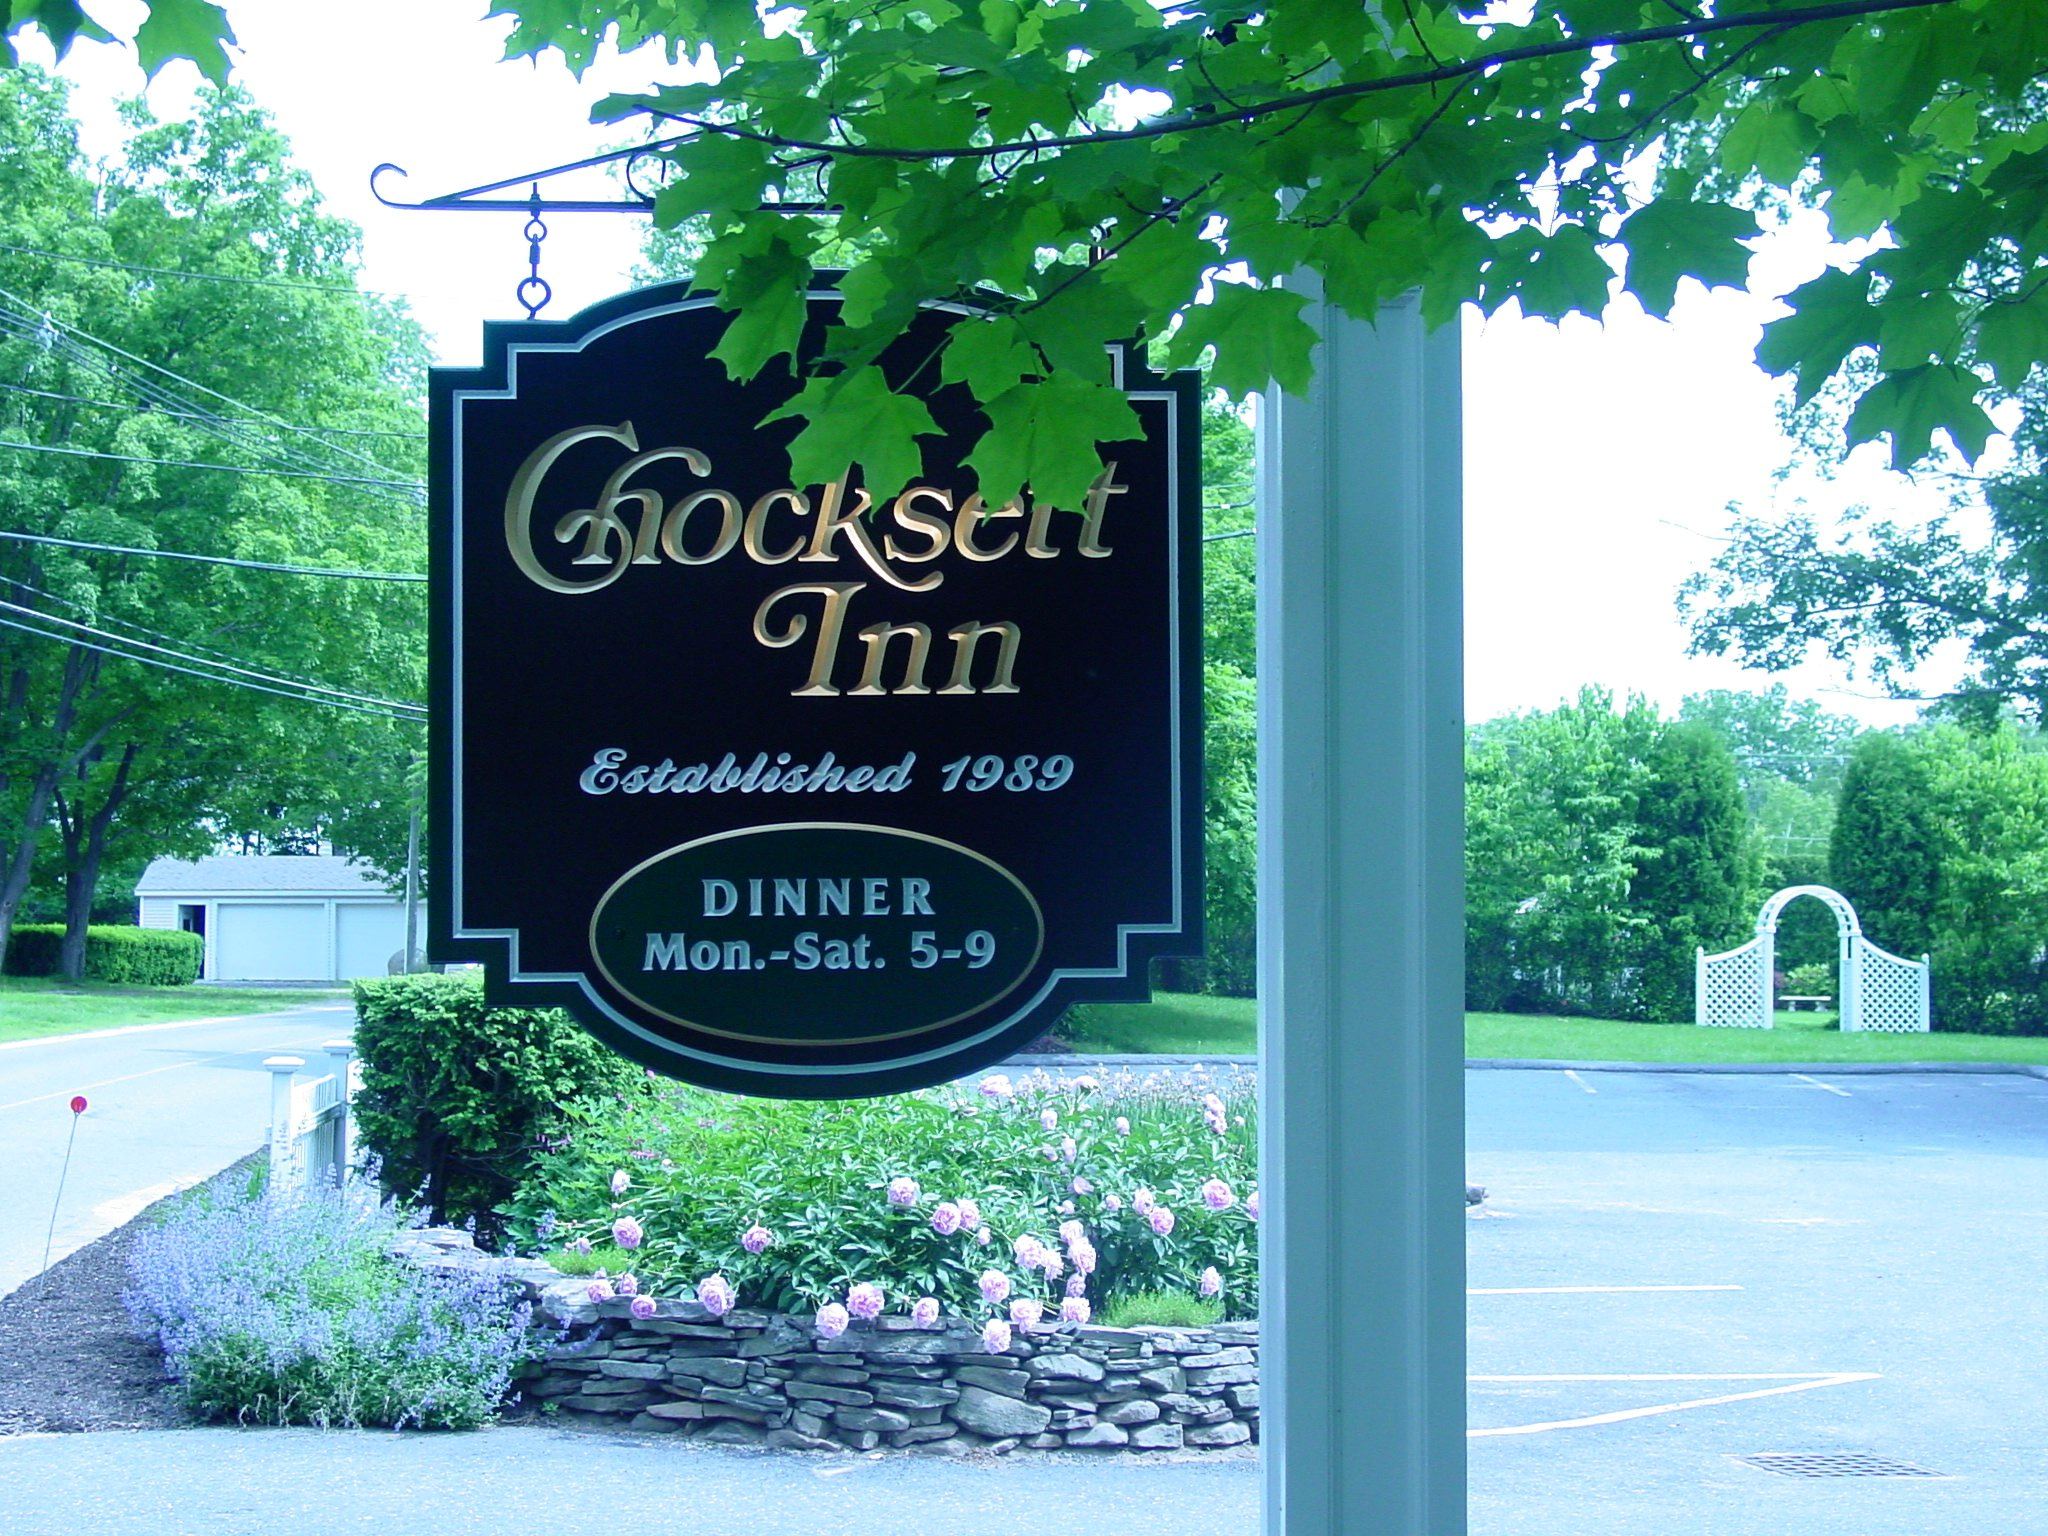 Chocksett Inn - 7